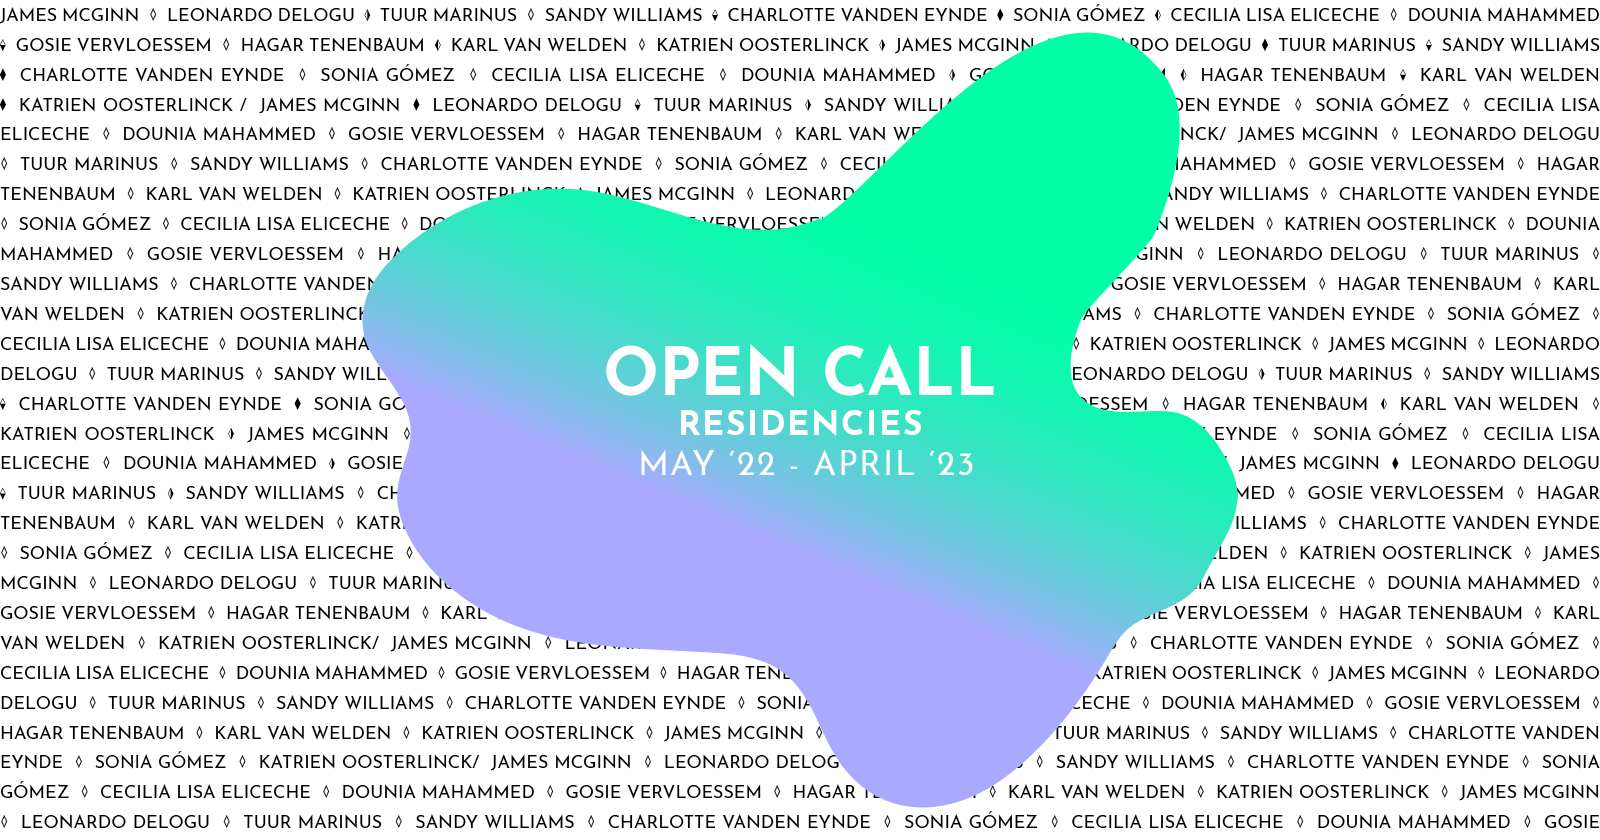 Open Call 2022-2023: Update